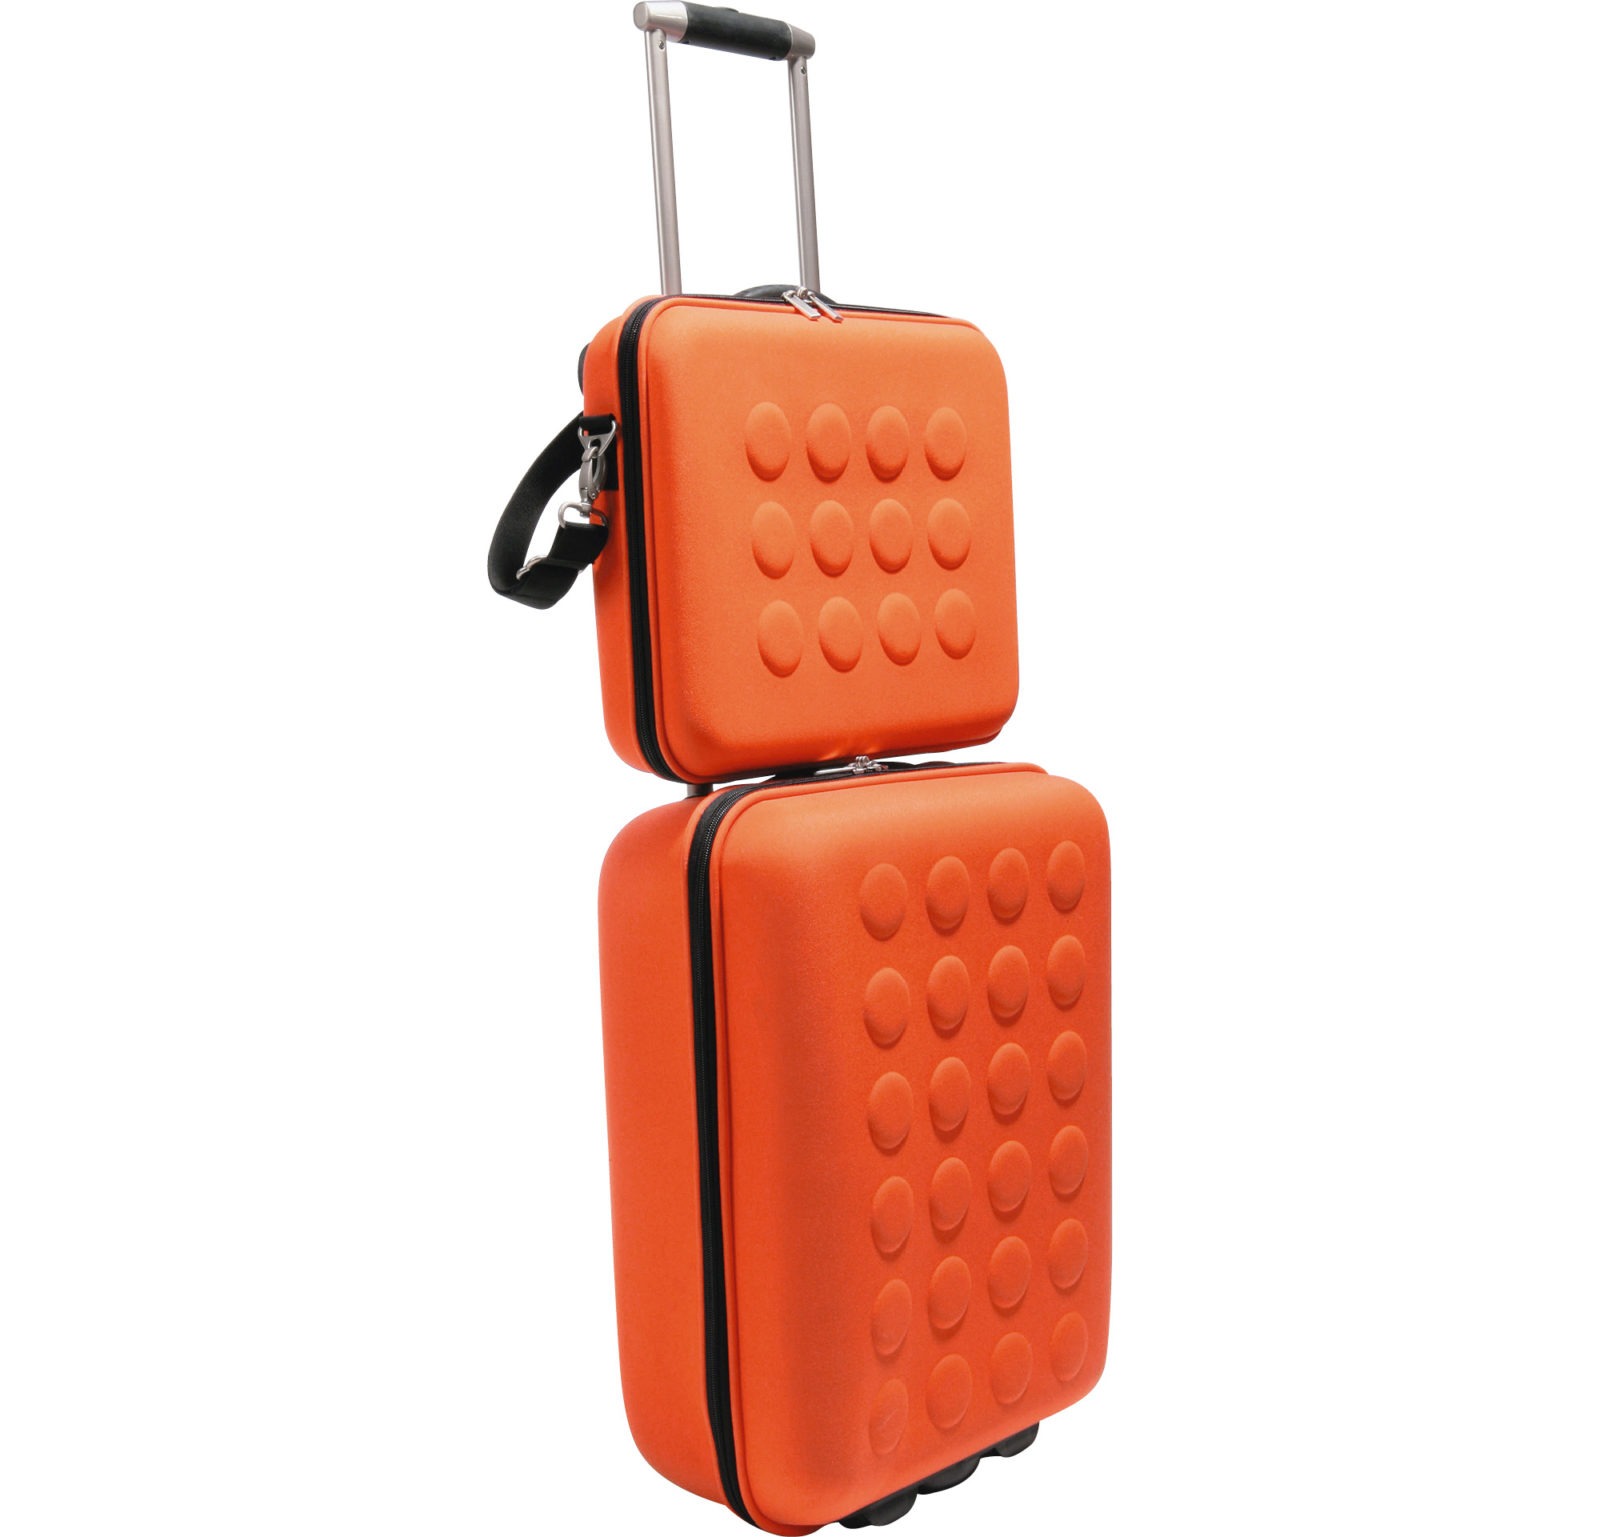 Bright orange cabin bag with wheels and an accompanying laptop bag, UPPTÄCKA.